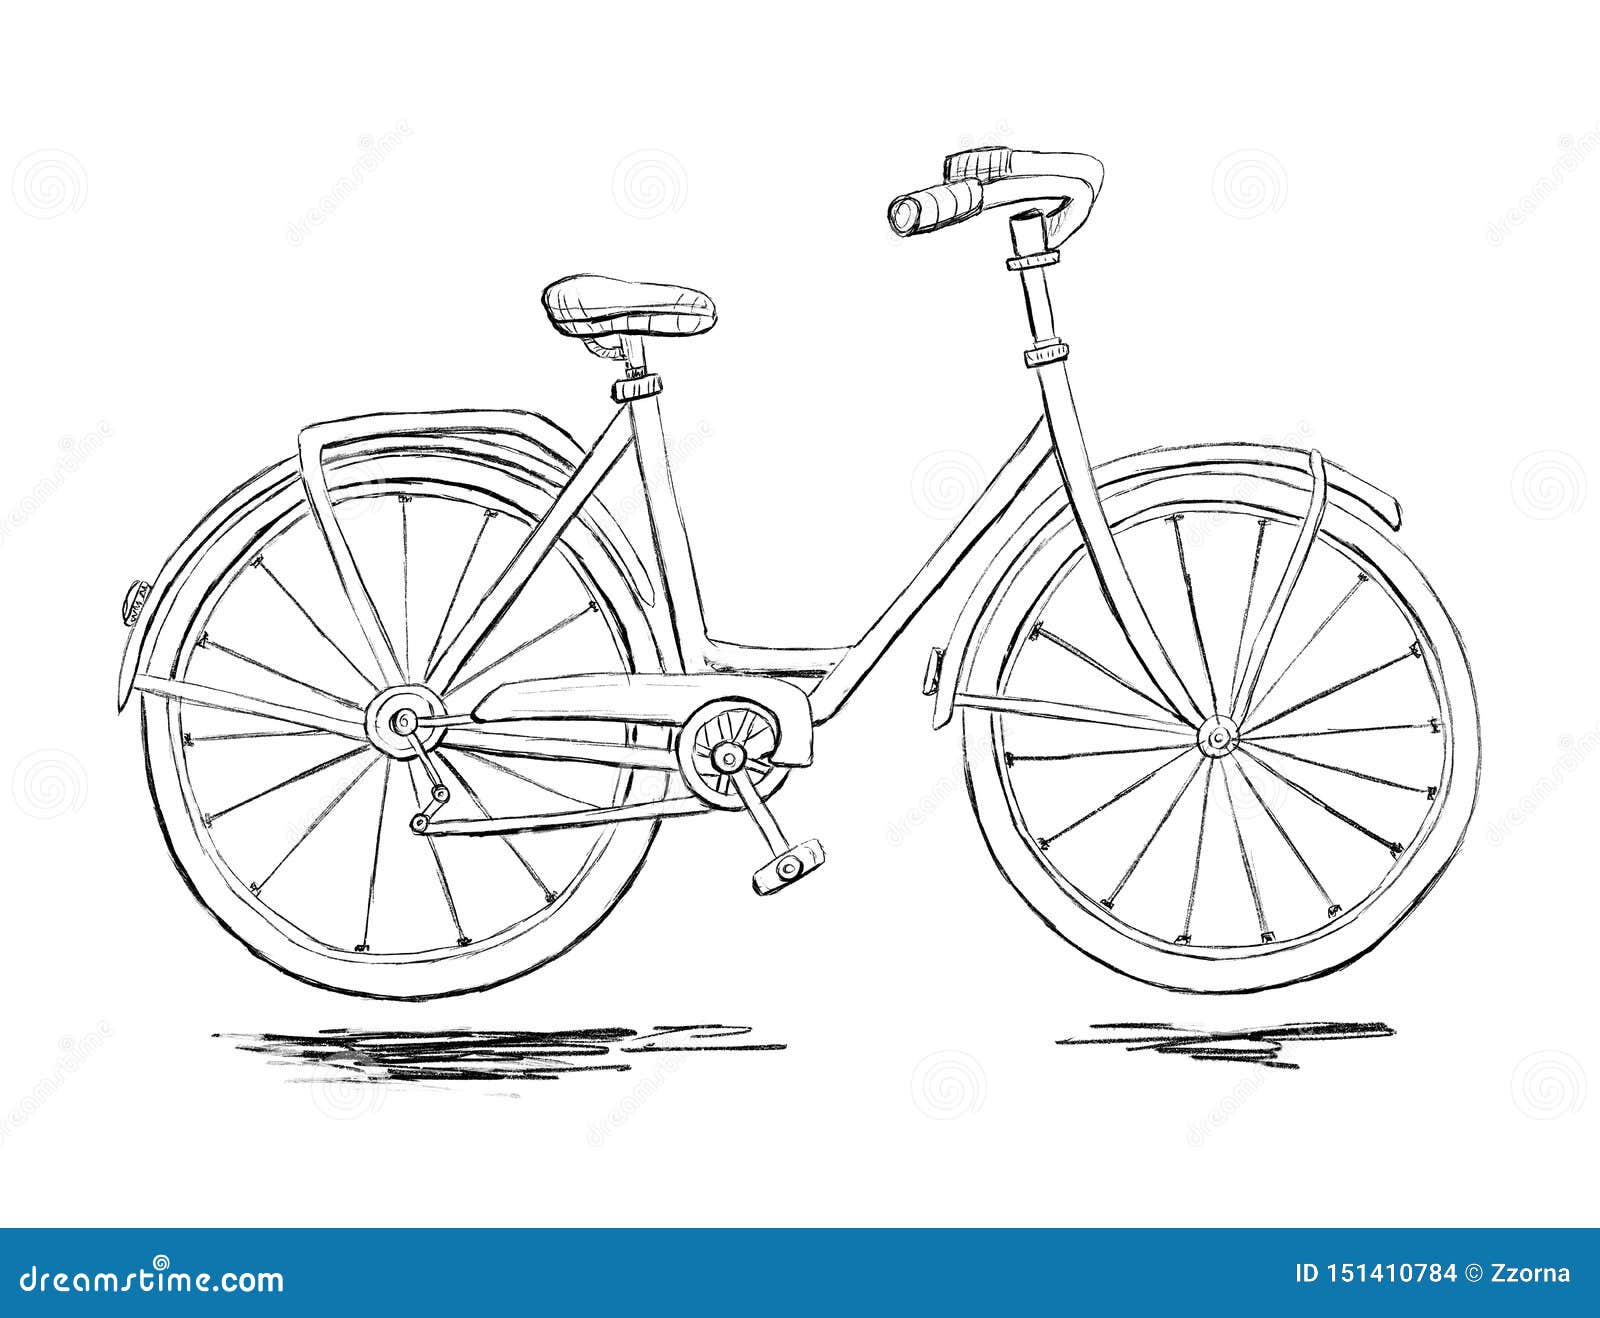 Bicycle (Bike) Drawing Tutorial - How to draw Bicycle (Bike) step by step